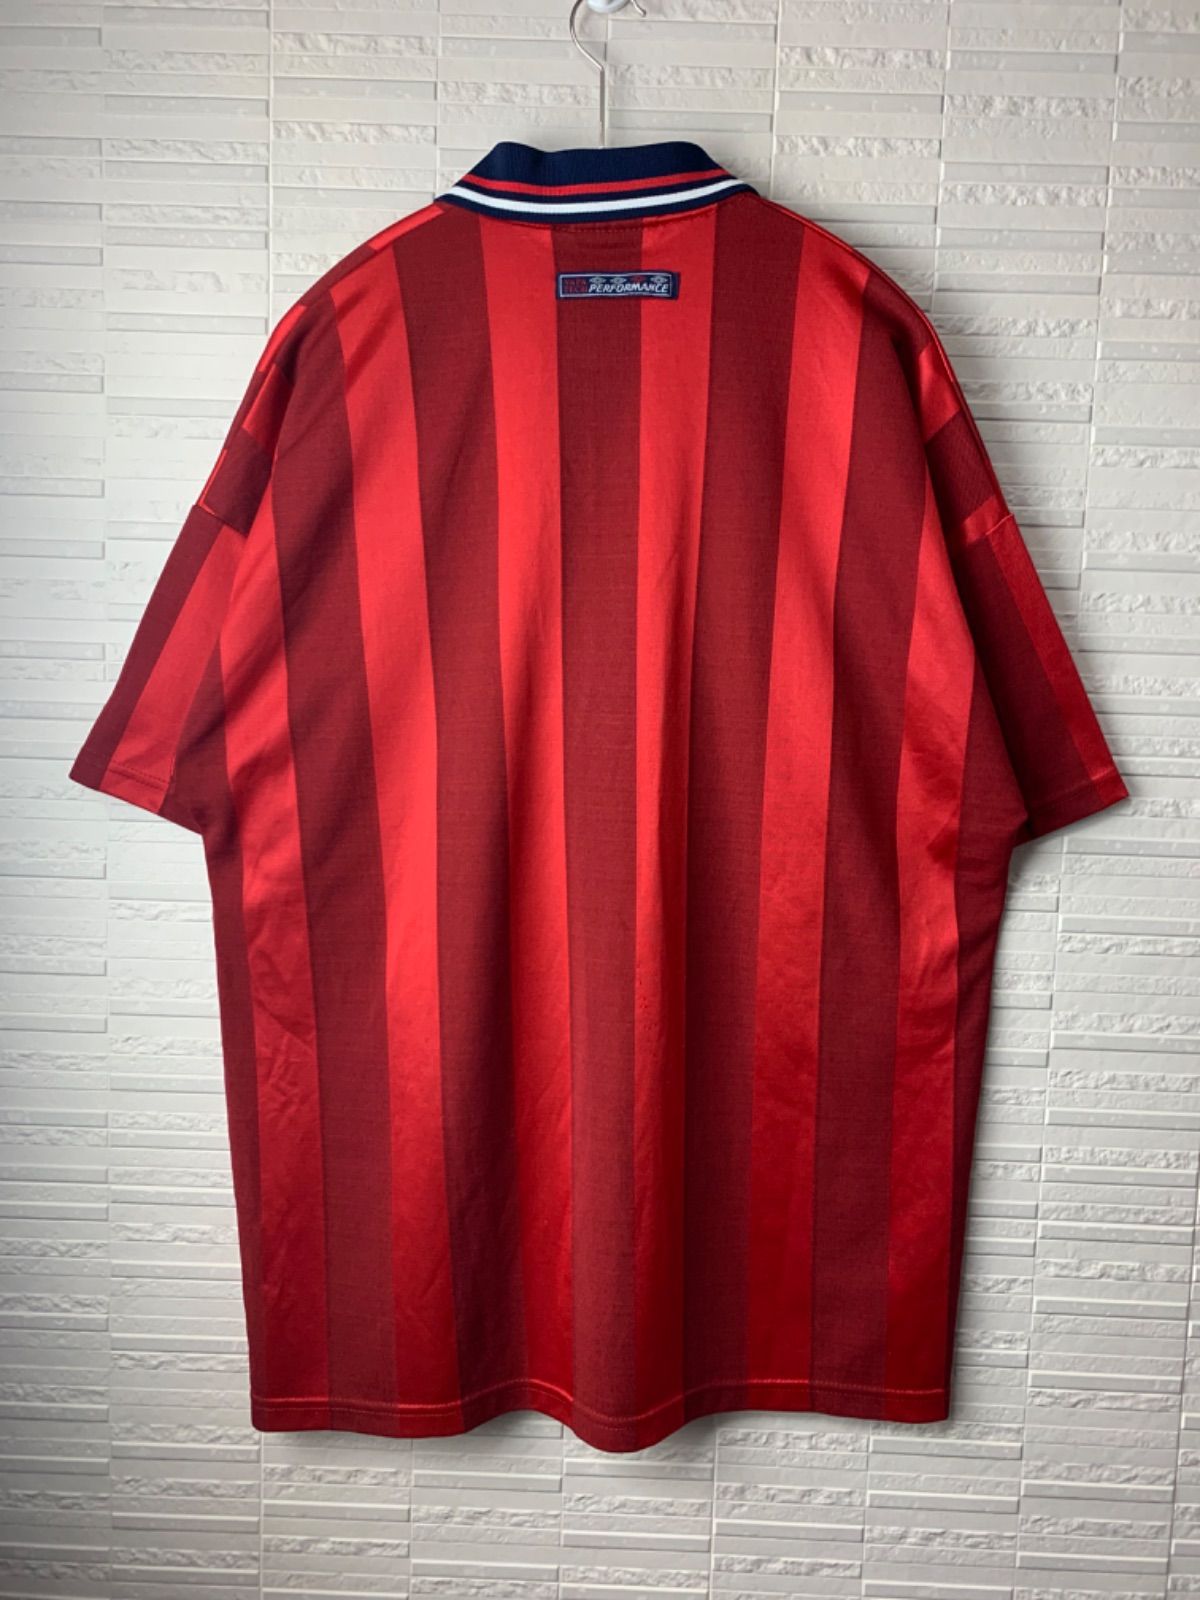 90s vintage umbro ユニフォーム イングランド代表 ゲームシャツ ...